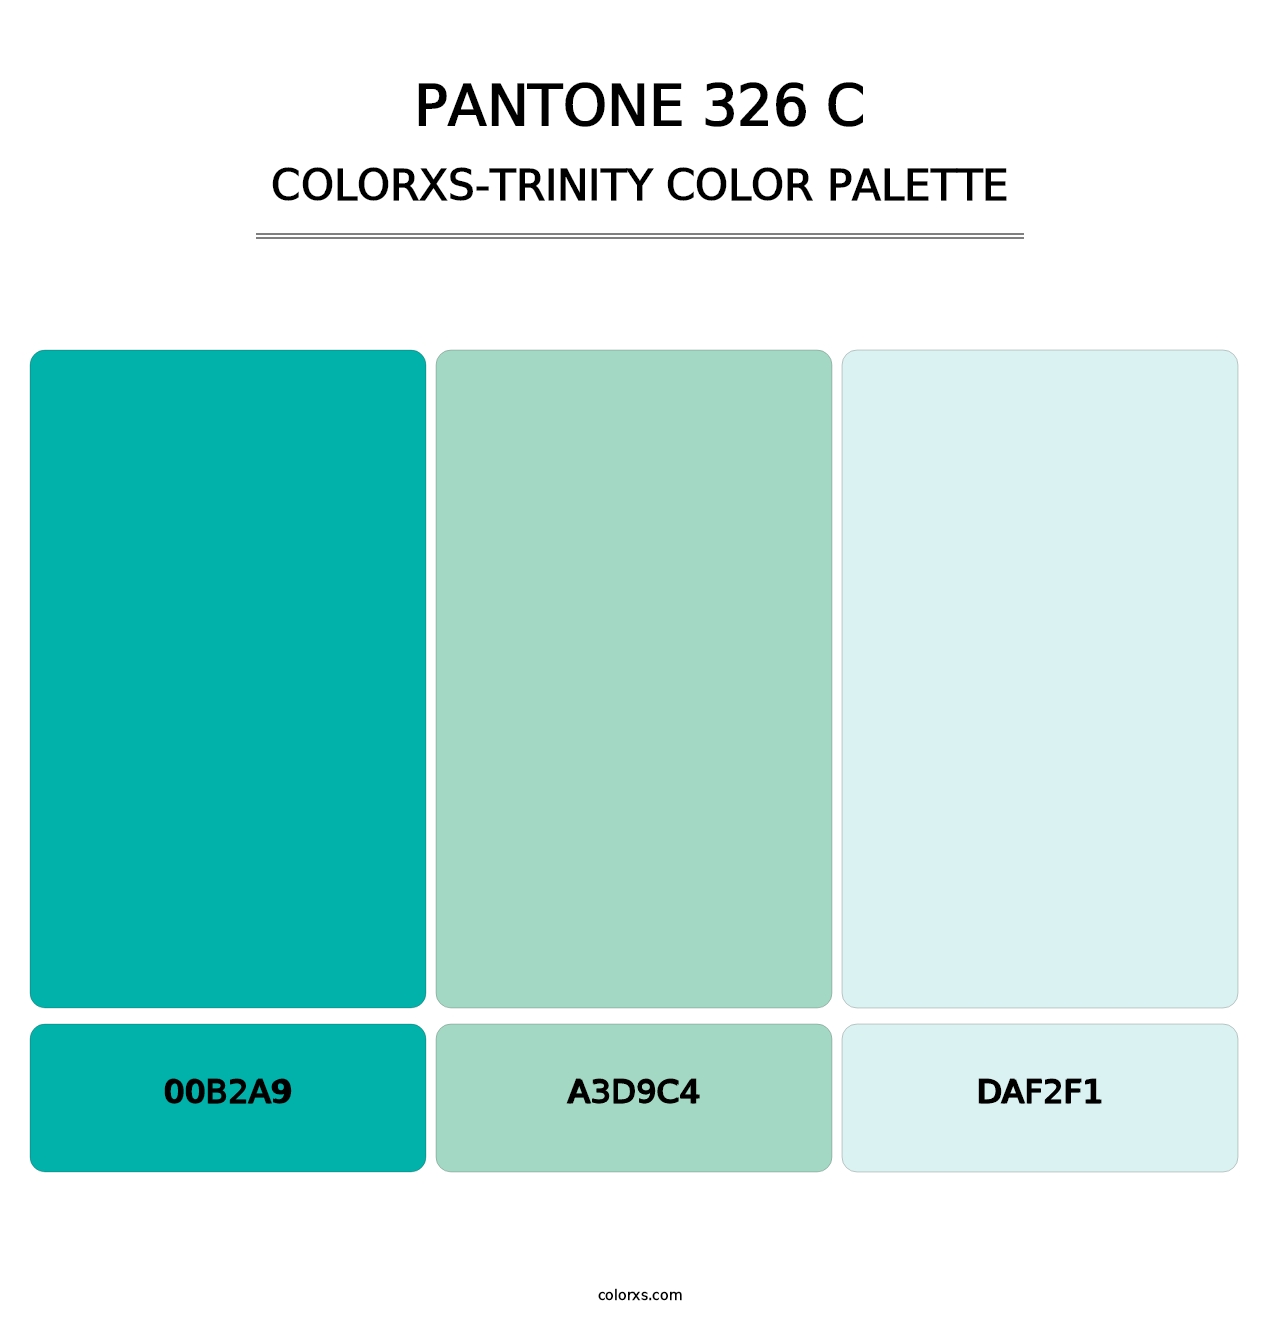 PANTONE 326 C - Colorxs Trinity Palette